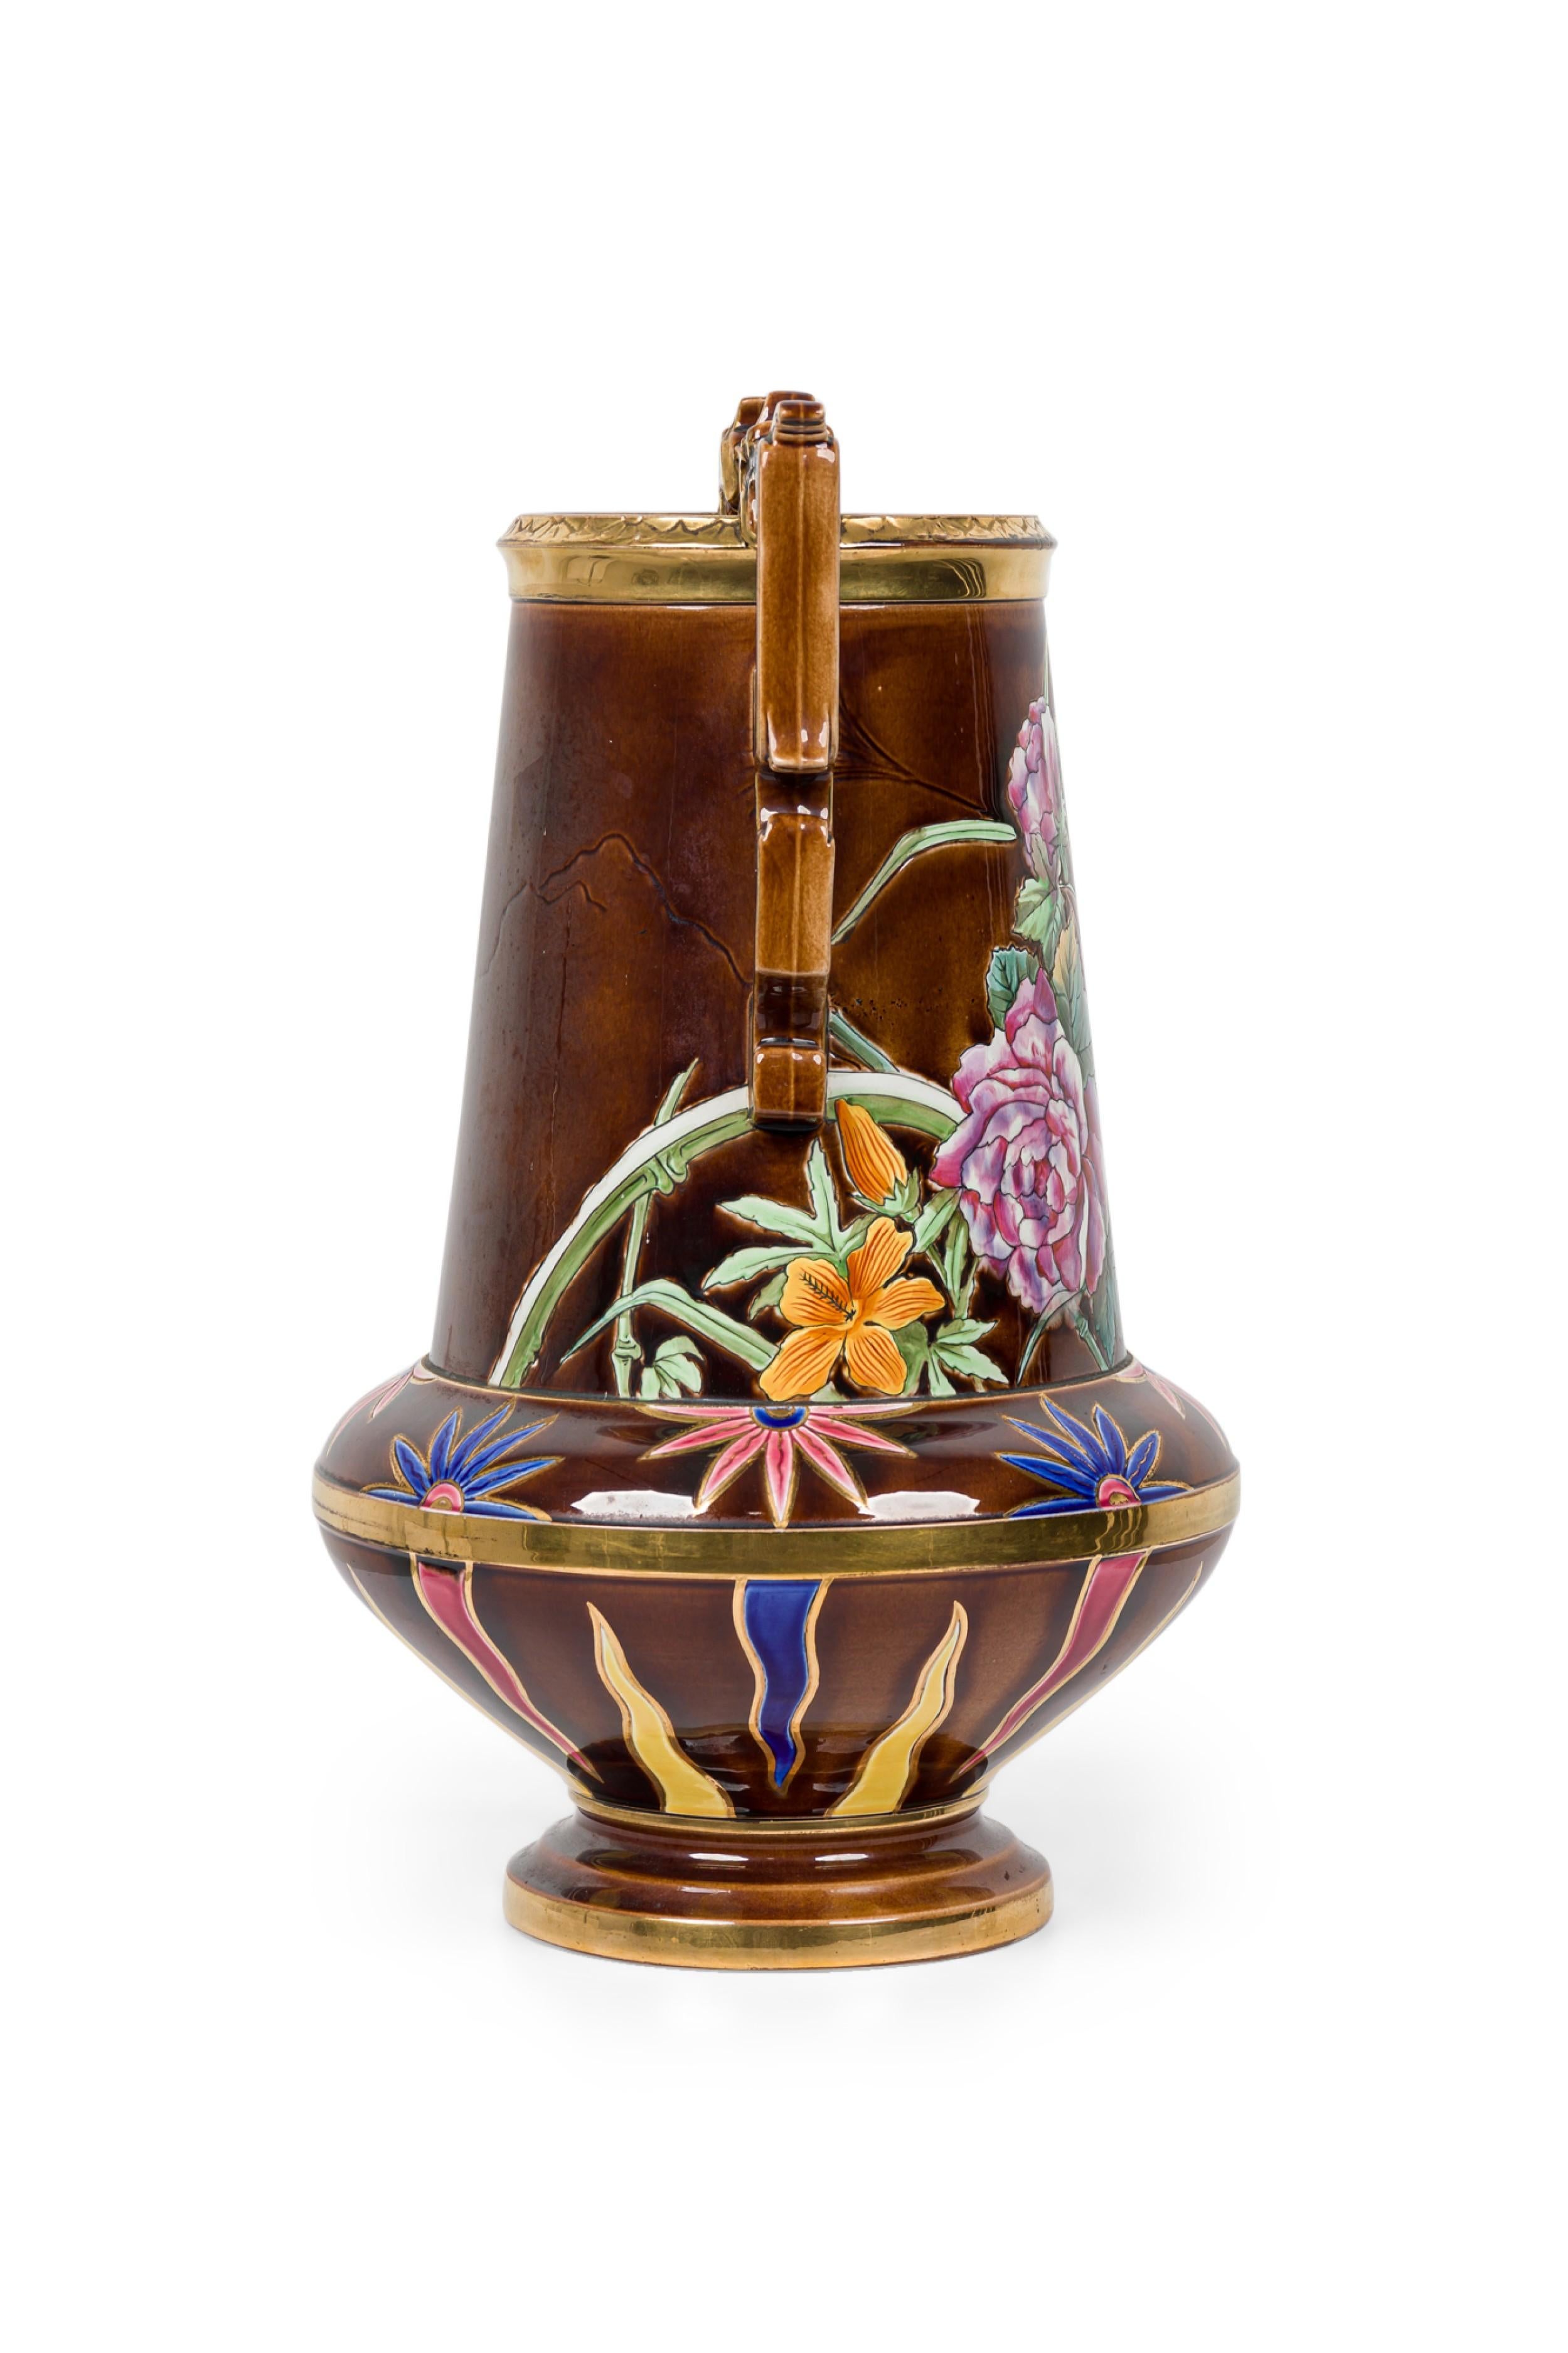 Dutch Victorian Aesthetic Movement Monumental Gilt Painted Ceramic Vessel For Sale 7